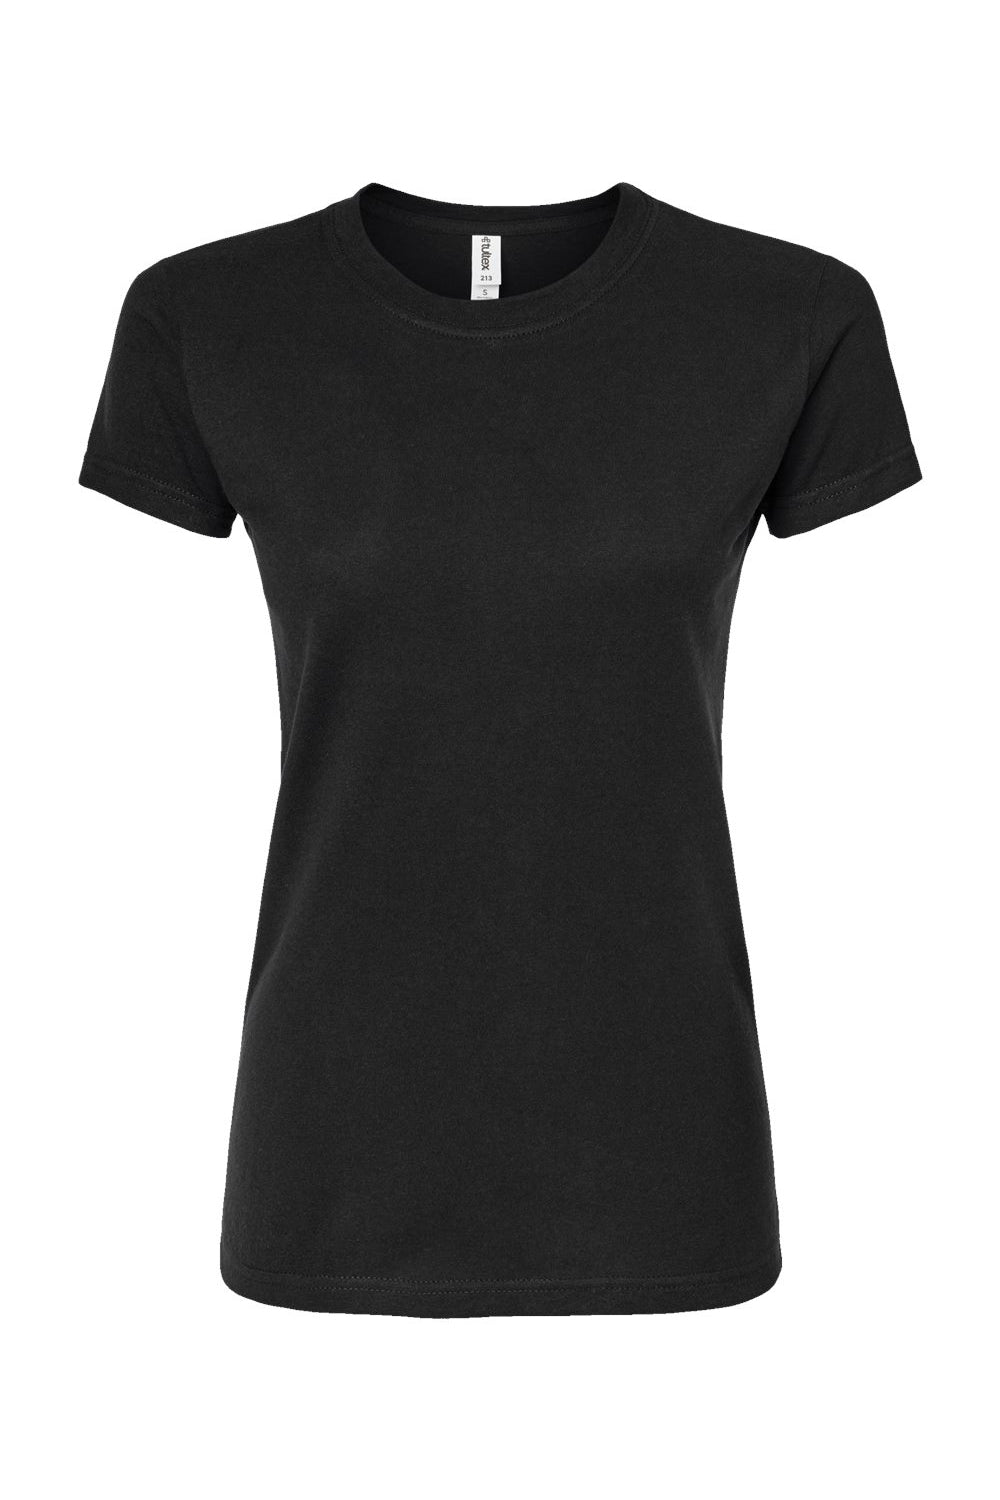 Tultex 213 Womens Fine Jersey Slim Fit Short Sleeve Crewneck T-Shirt Black Flat Front